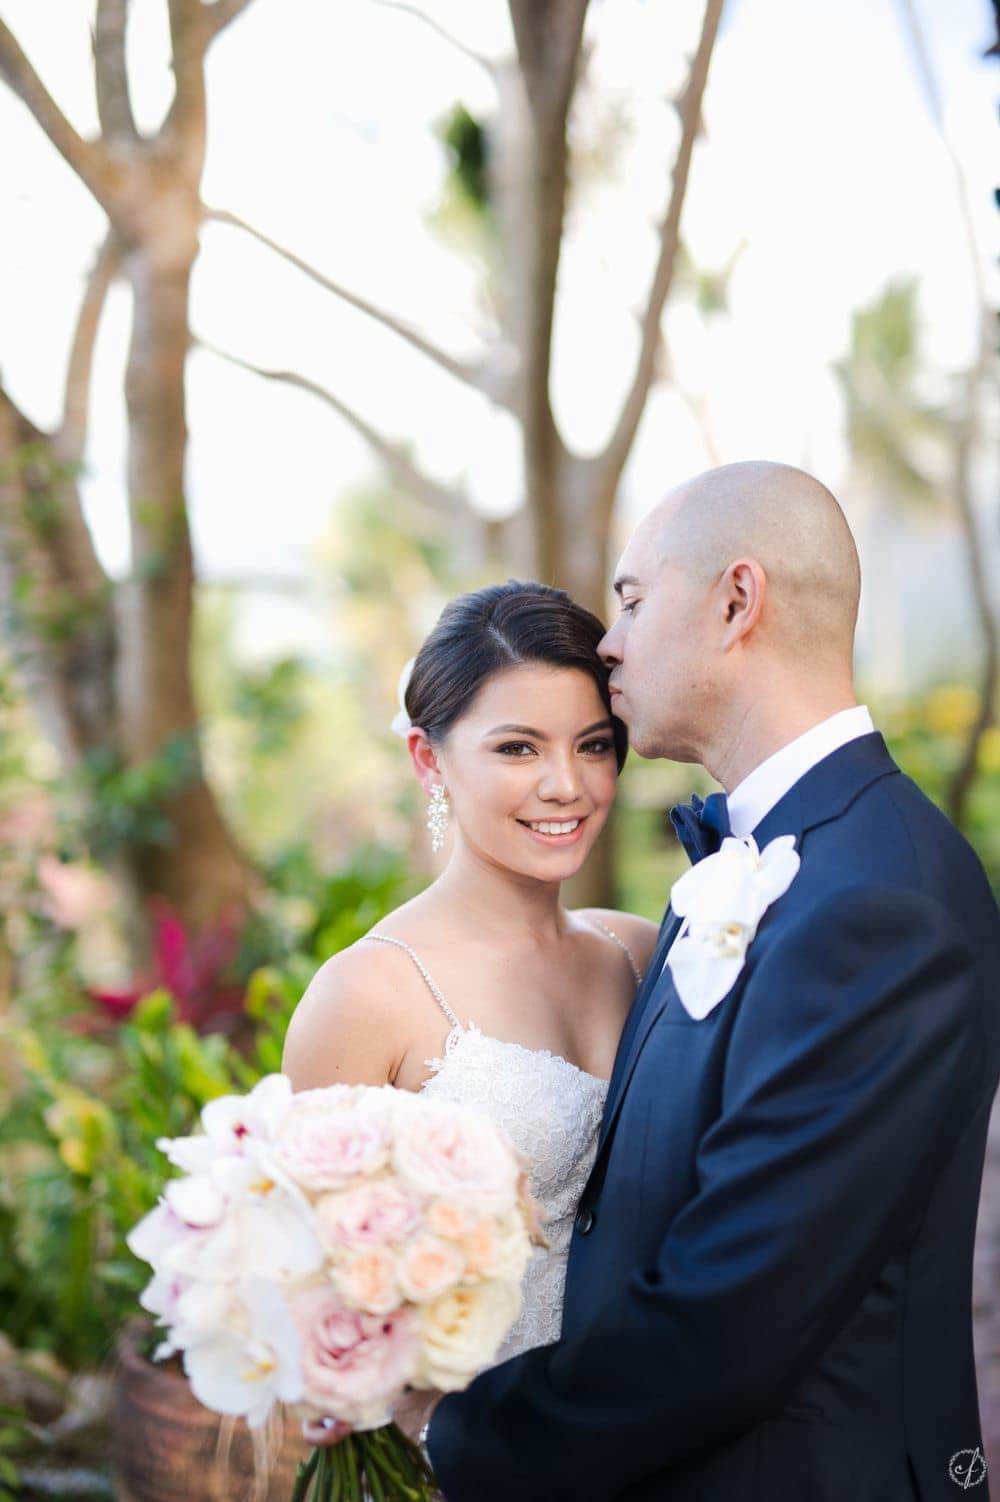 Puerto Rico wedding photographer Camille Fontanez shares a beautiful outdoor destination wedding at Hacienda Rio Grande